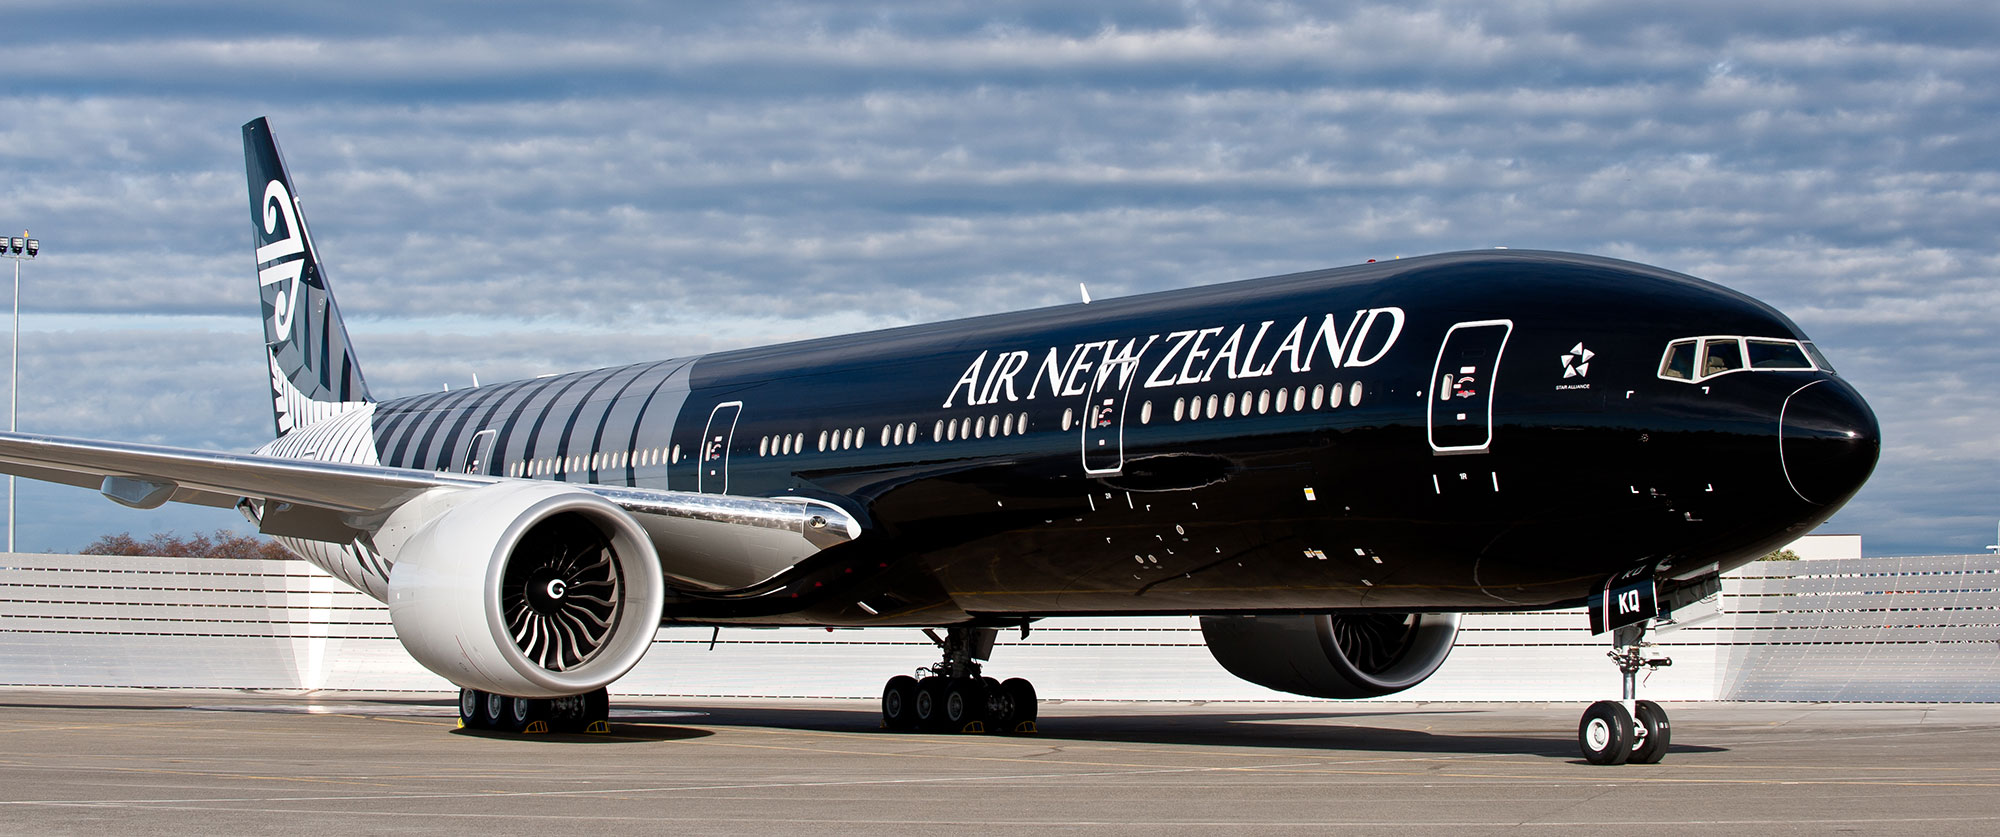 Air New Zealand - black plane exterior